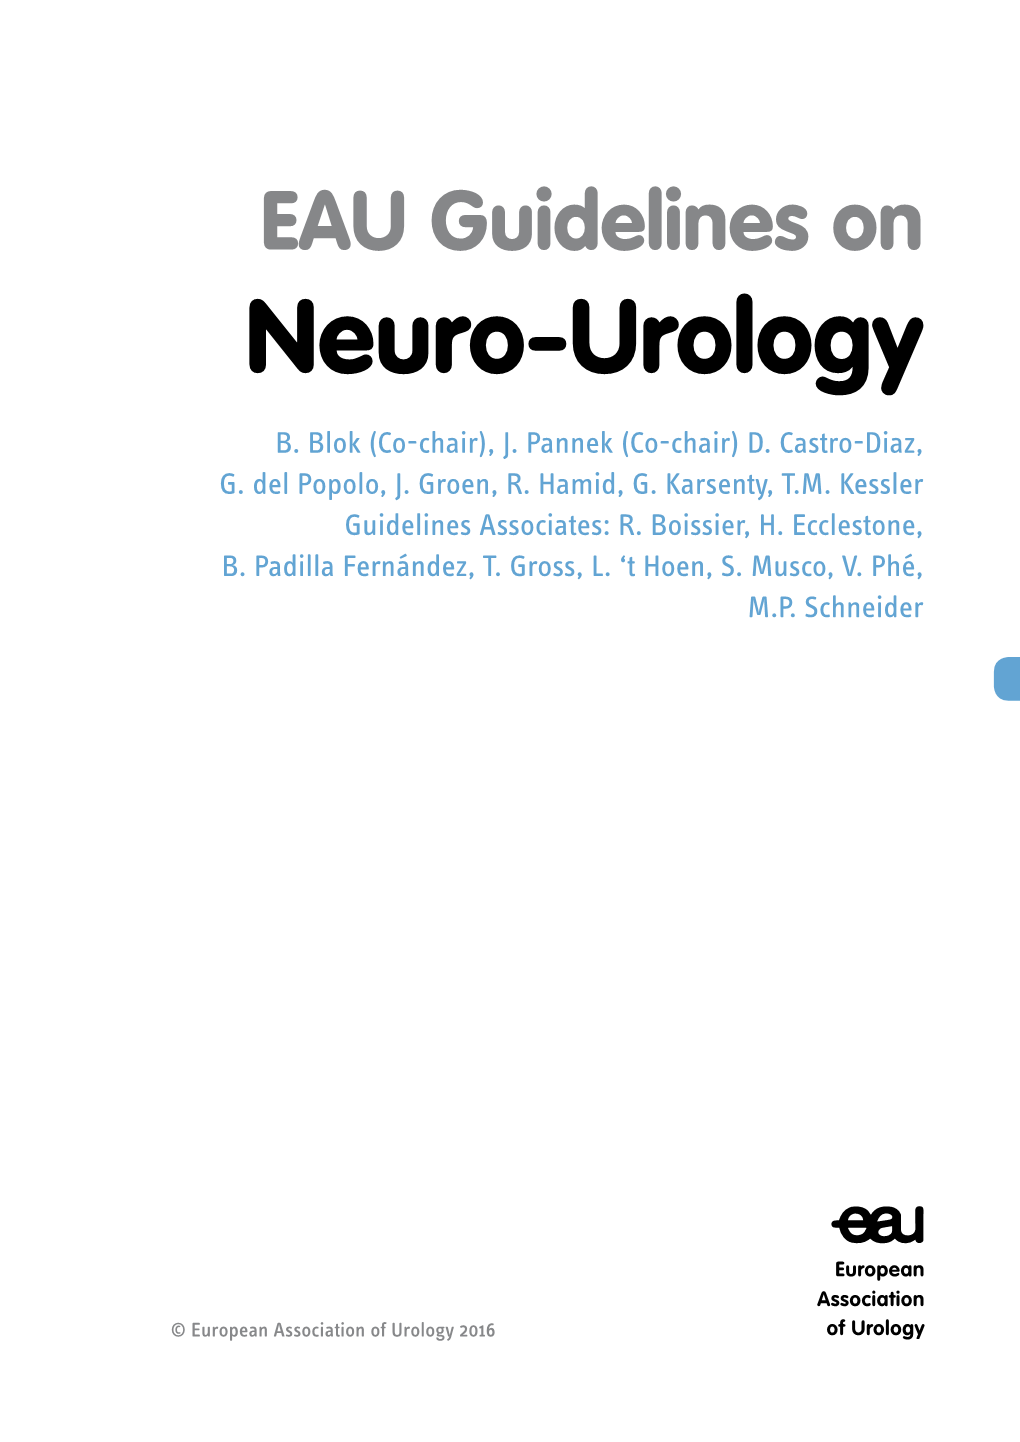 EAU Guidelines on Neuro-Urology